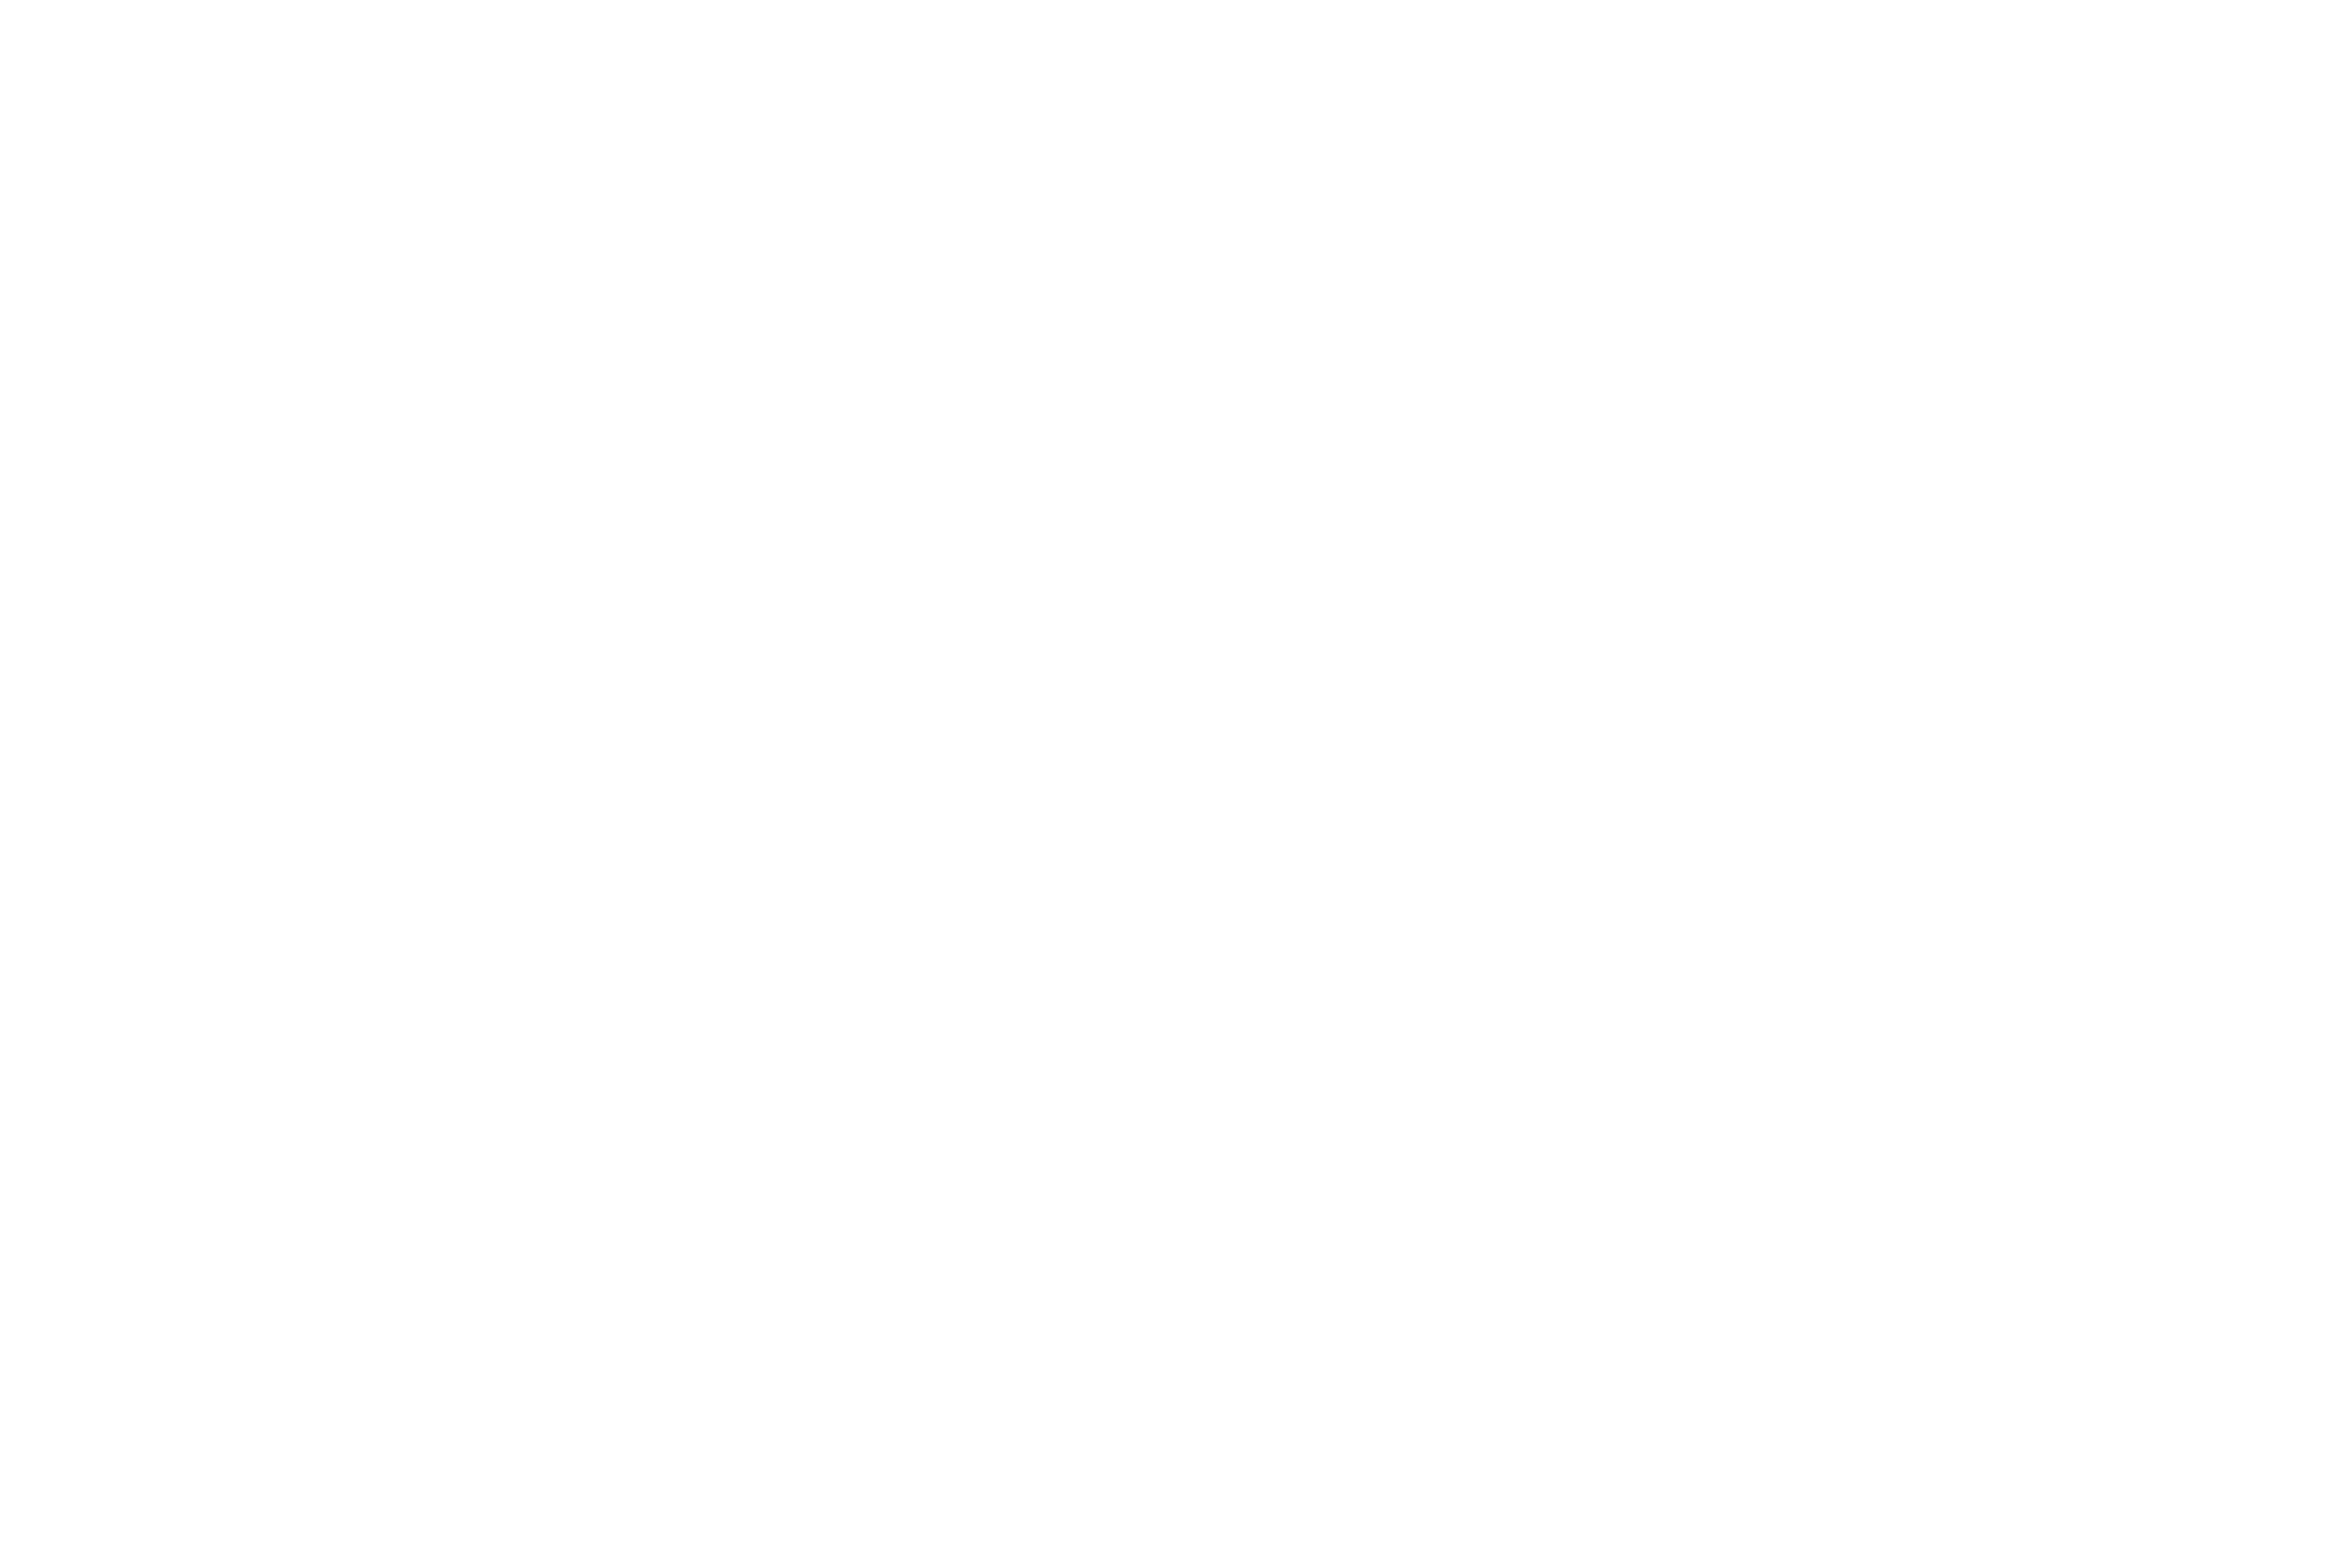 Buks Capital